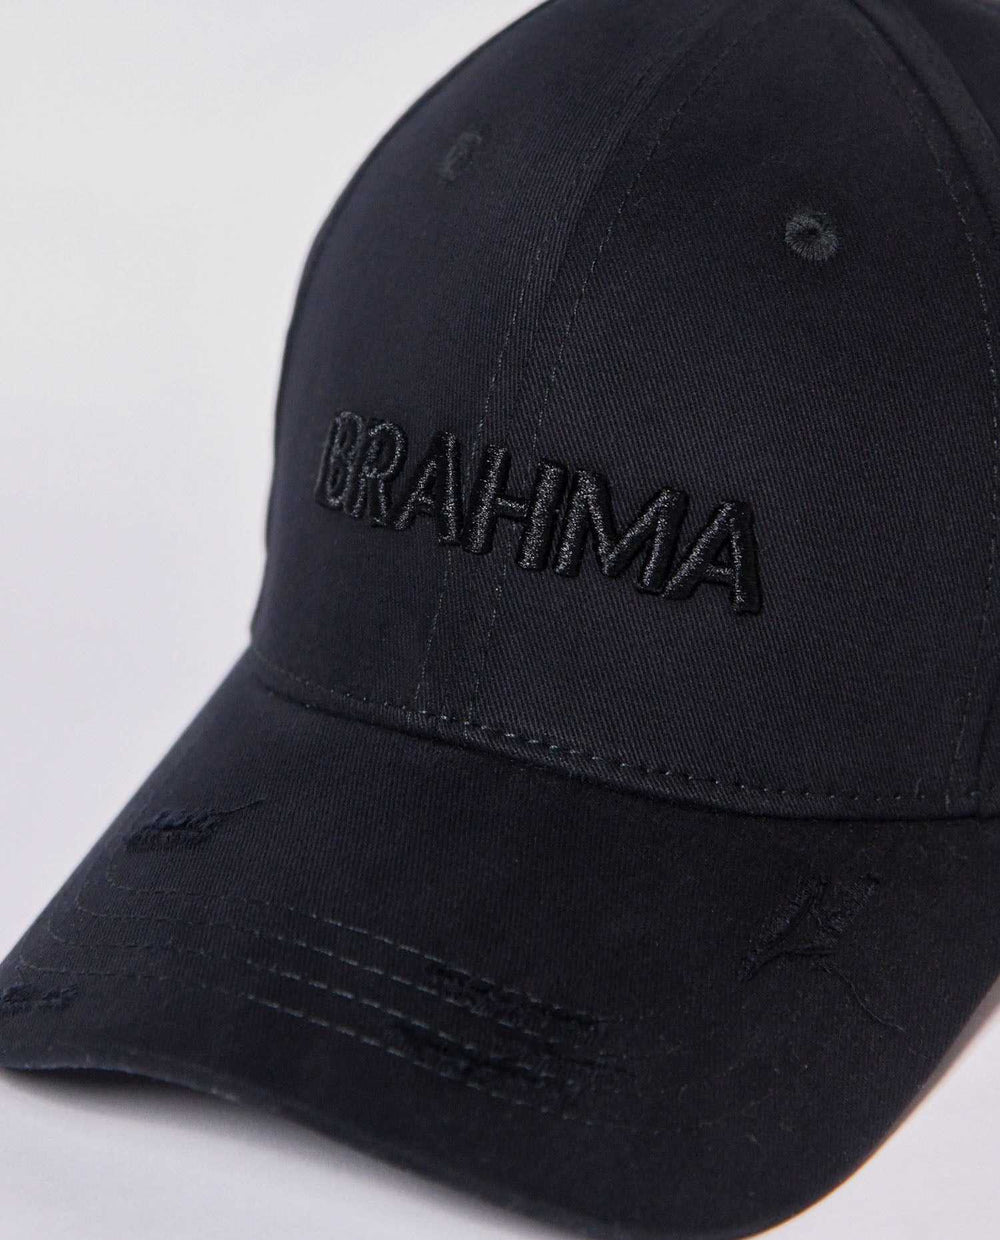 Brahma- Black Baseball Cap Accessories House Of Brahma